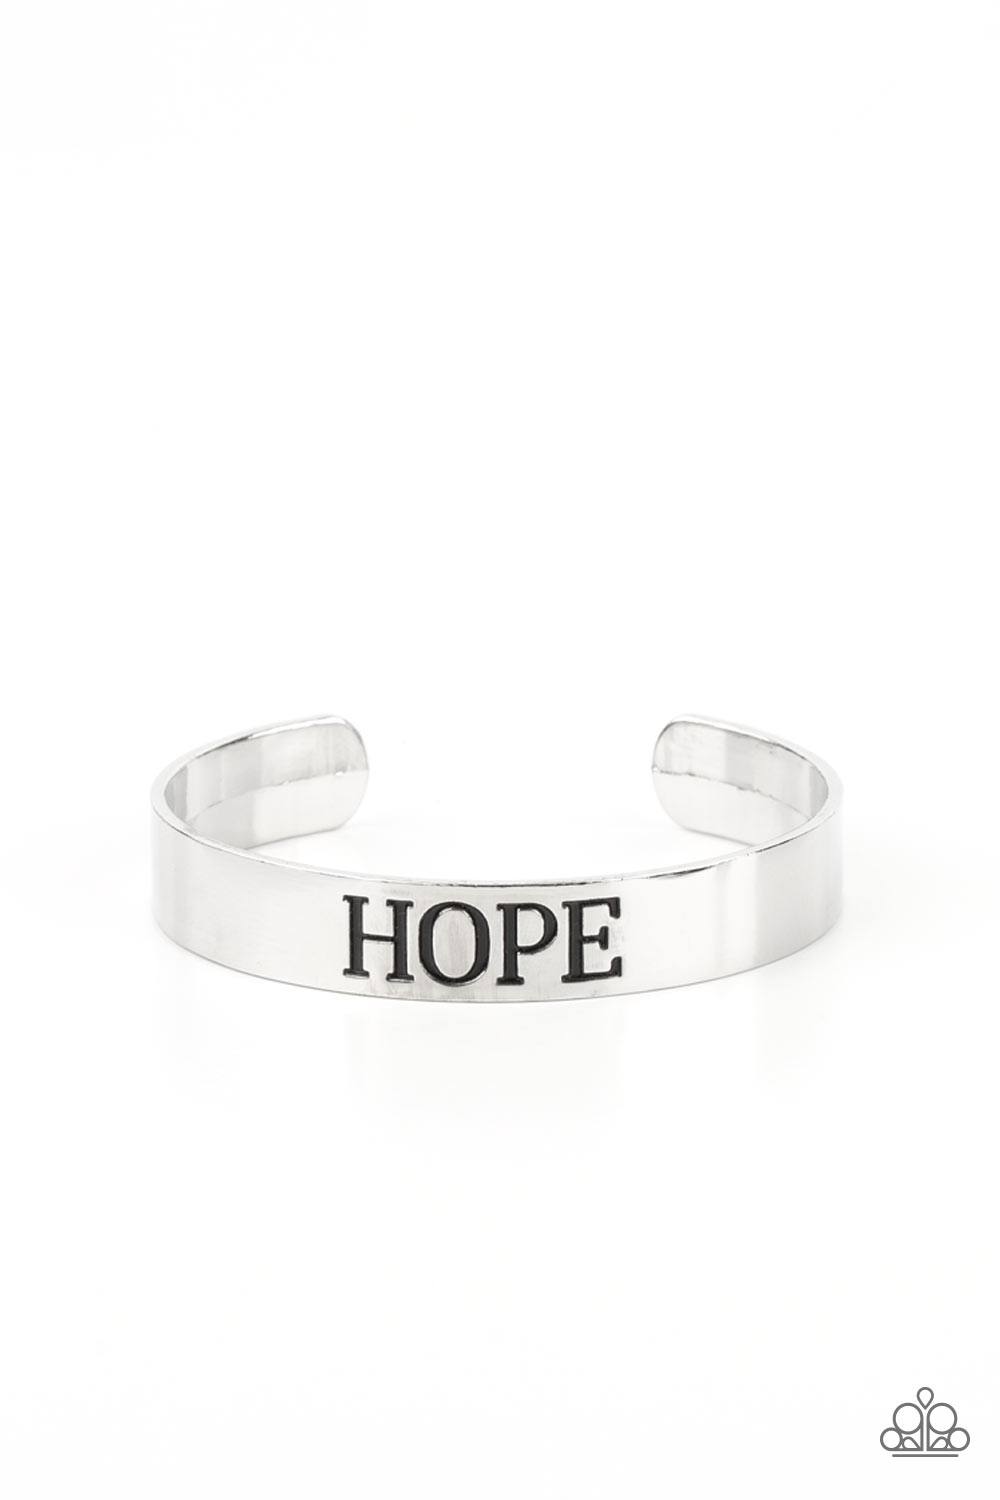 Bracelet - Hope Makes The World Go Round - Silver